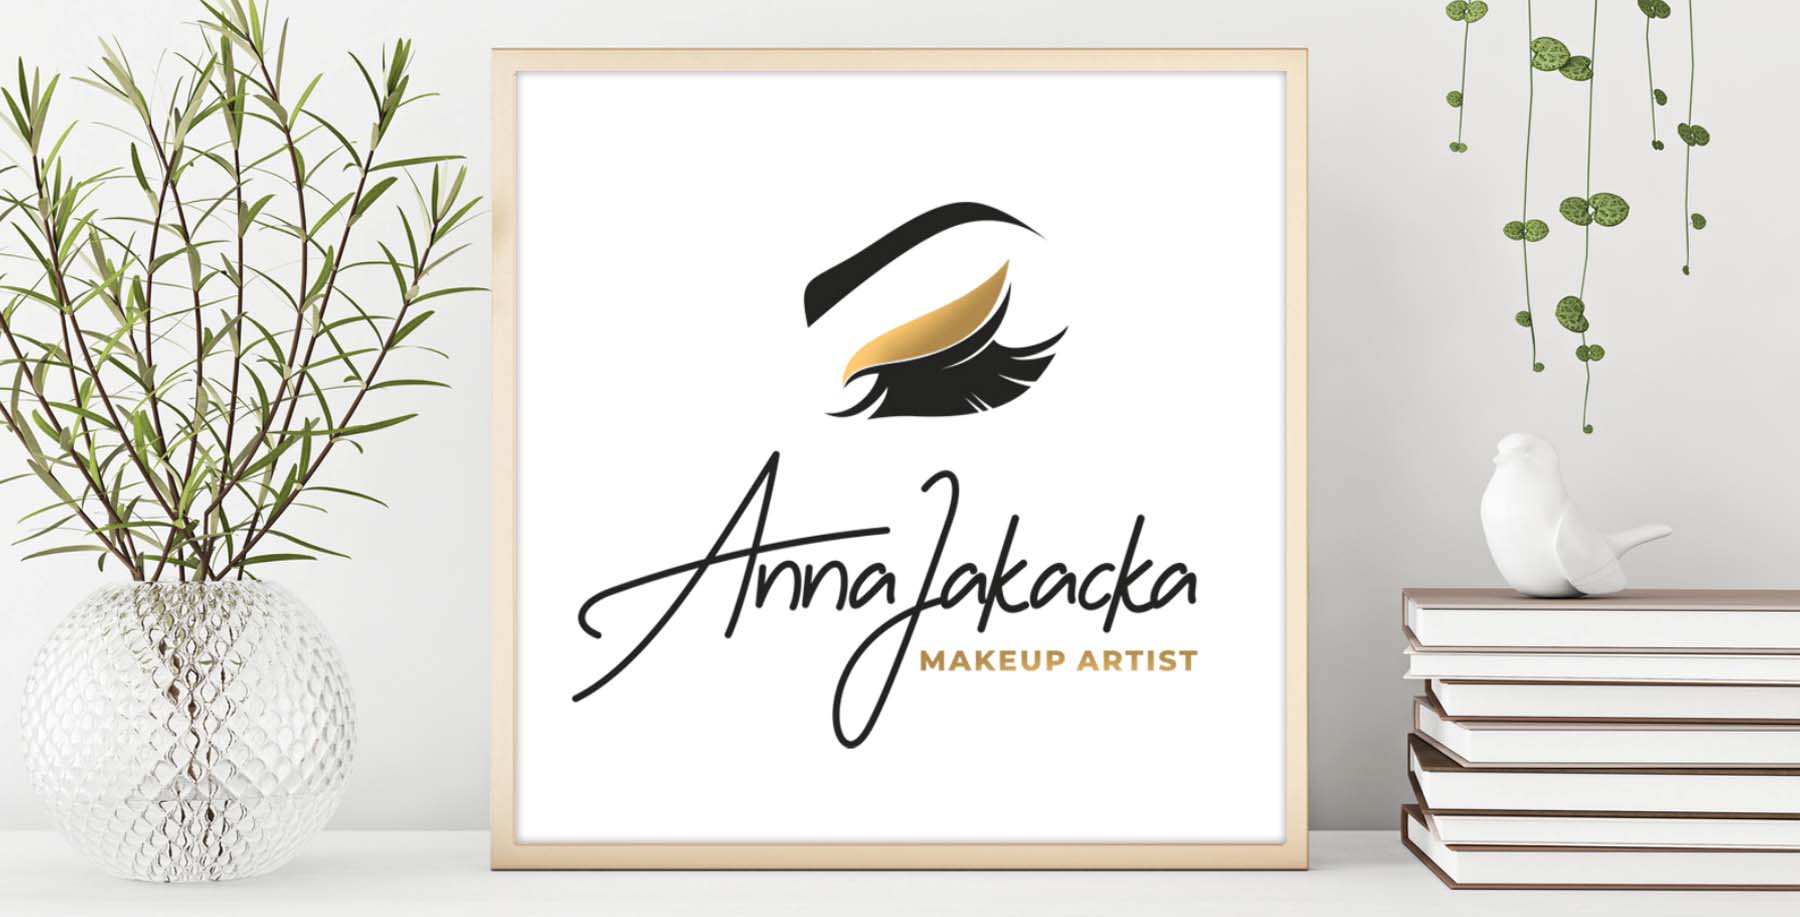 Anna Jakacka, Wild Head Studio, logo